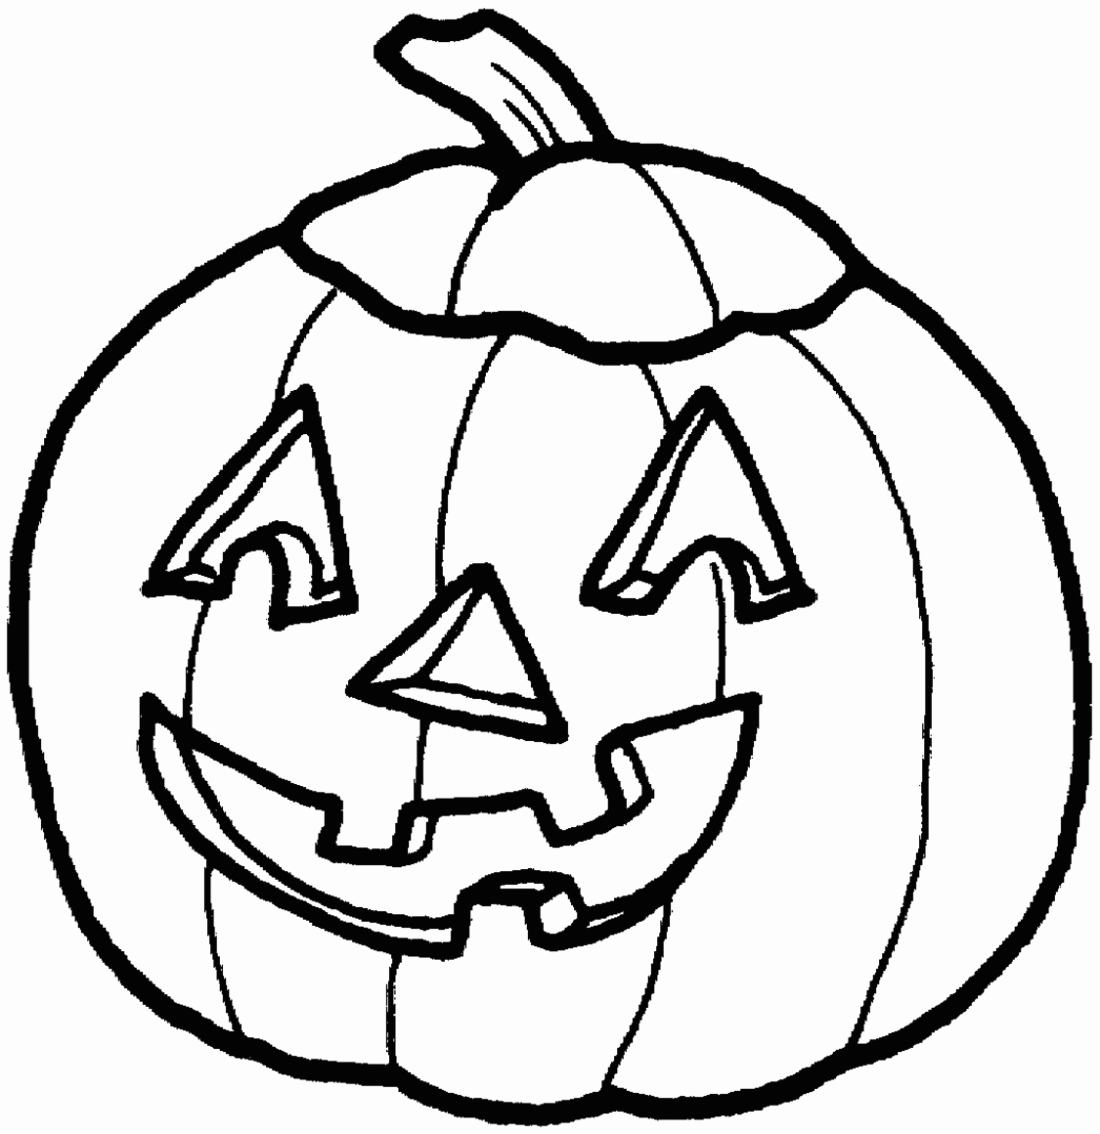 Easy Carved Halloween Pumpkin